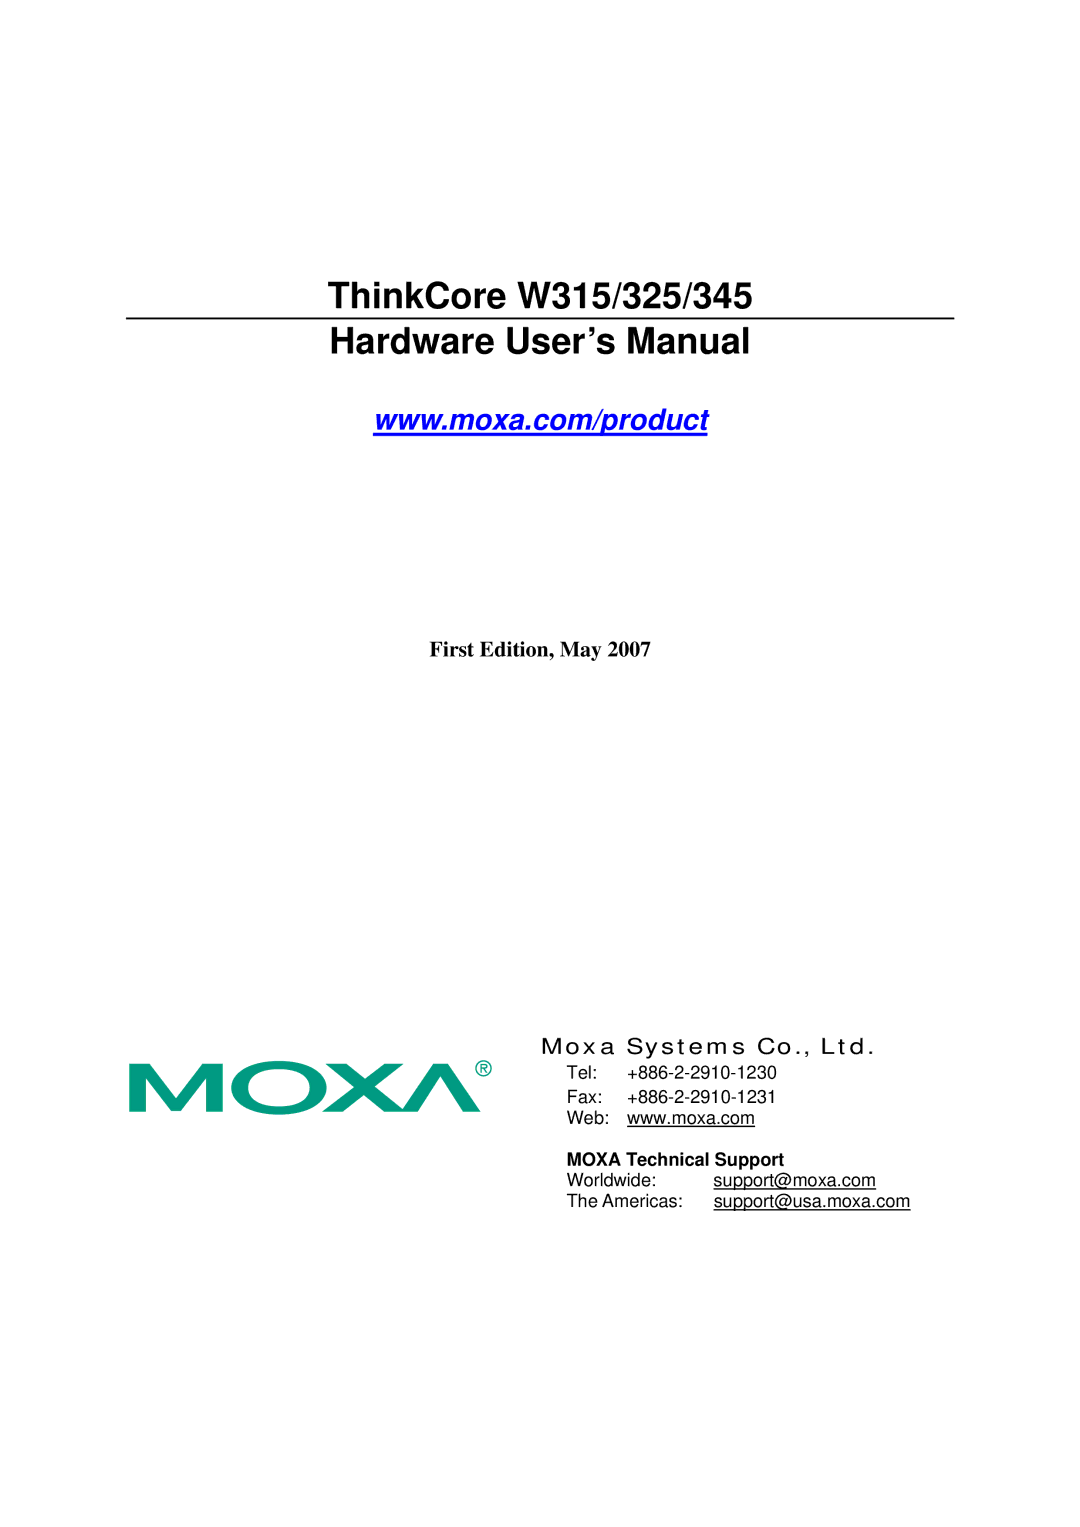 Moxa Technologies user manual ThinkCore W315/325/345 Hardware User’s Manual, Moxa Technical Support 